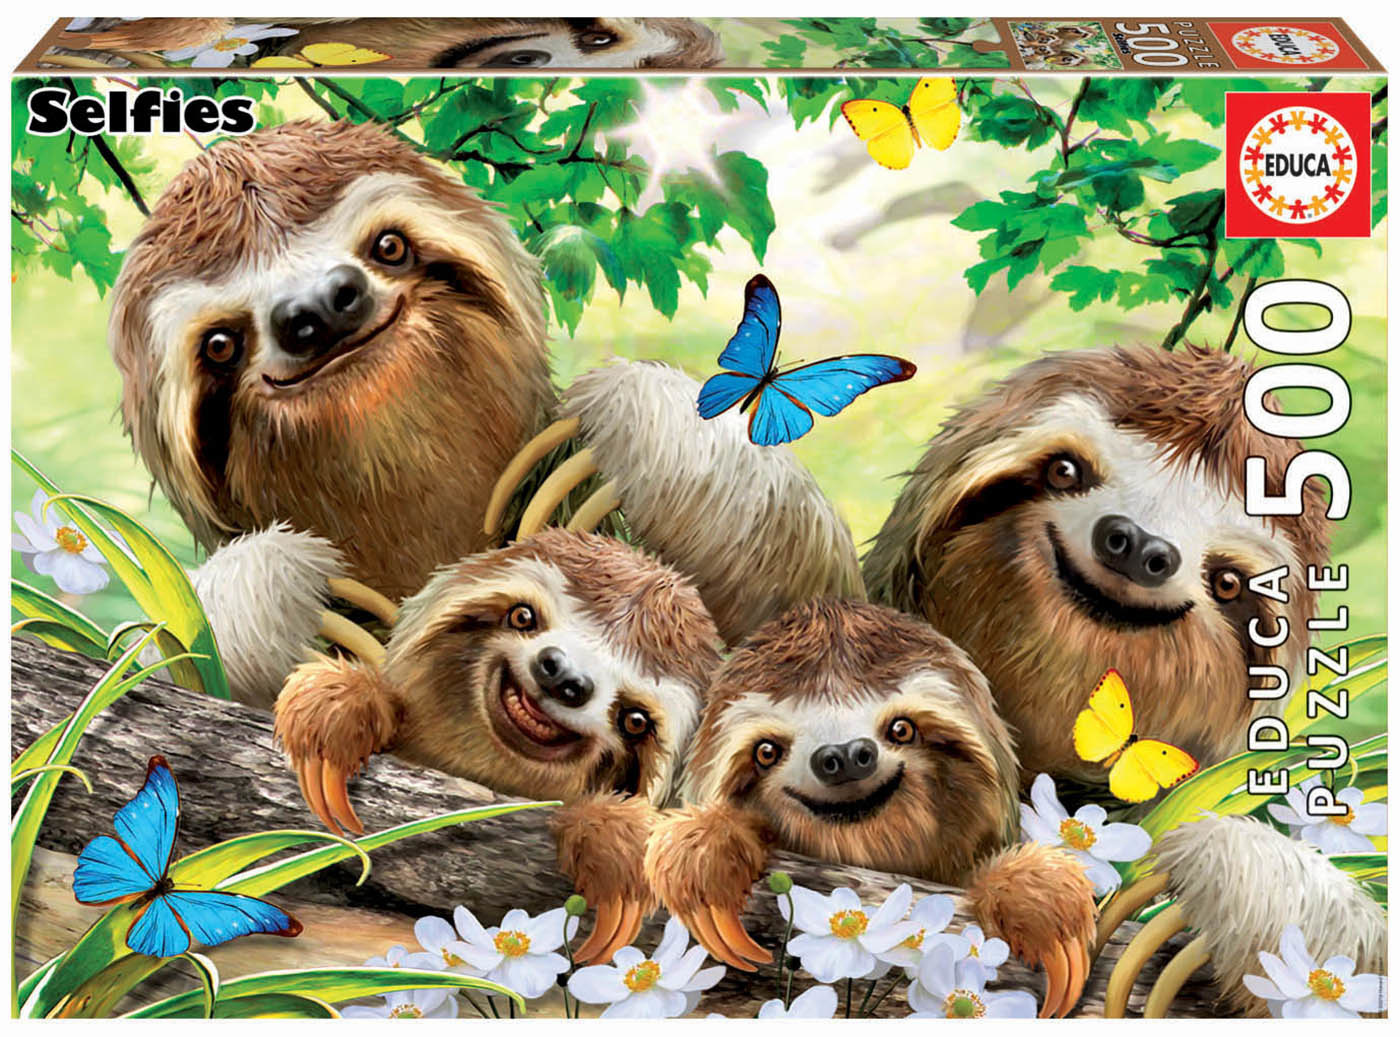 educa-sloth-family-selfie-500-pieces-jigsaw-puzzle.jpg